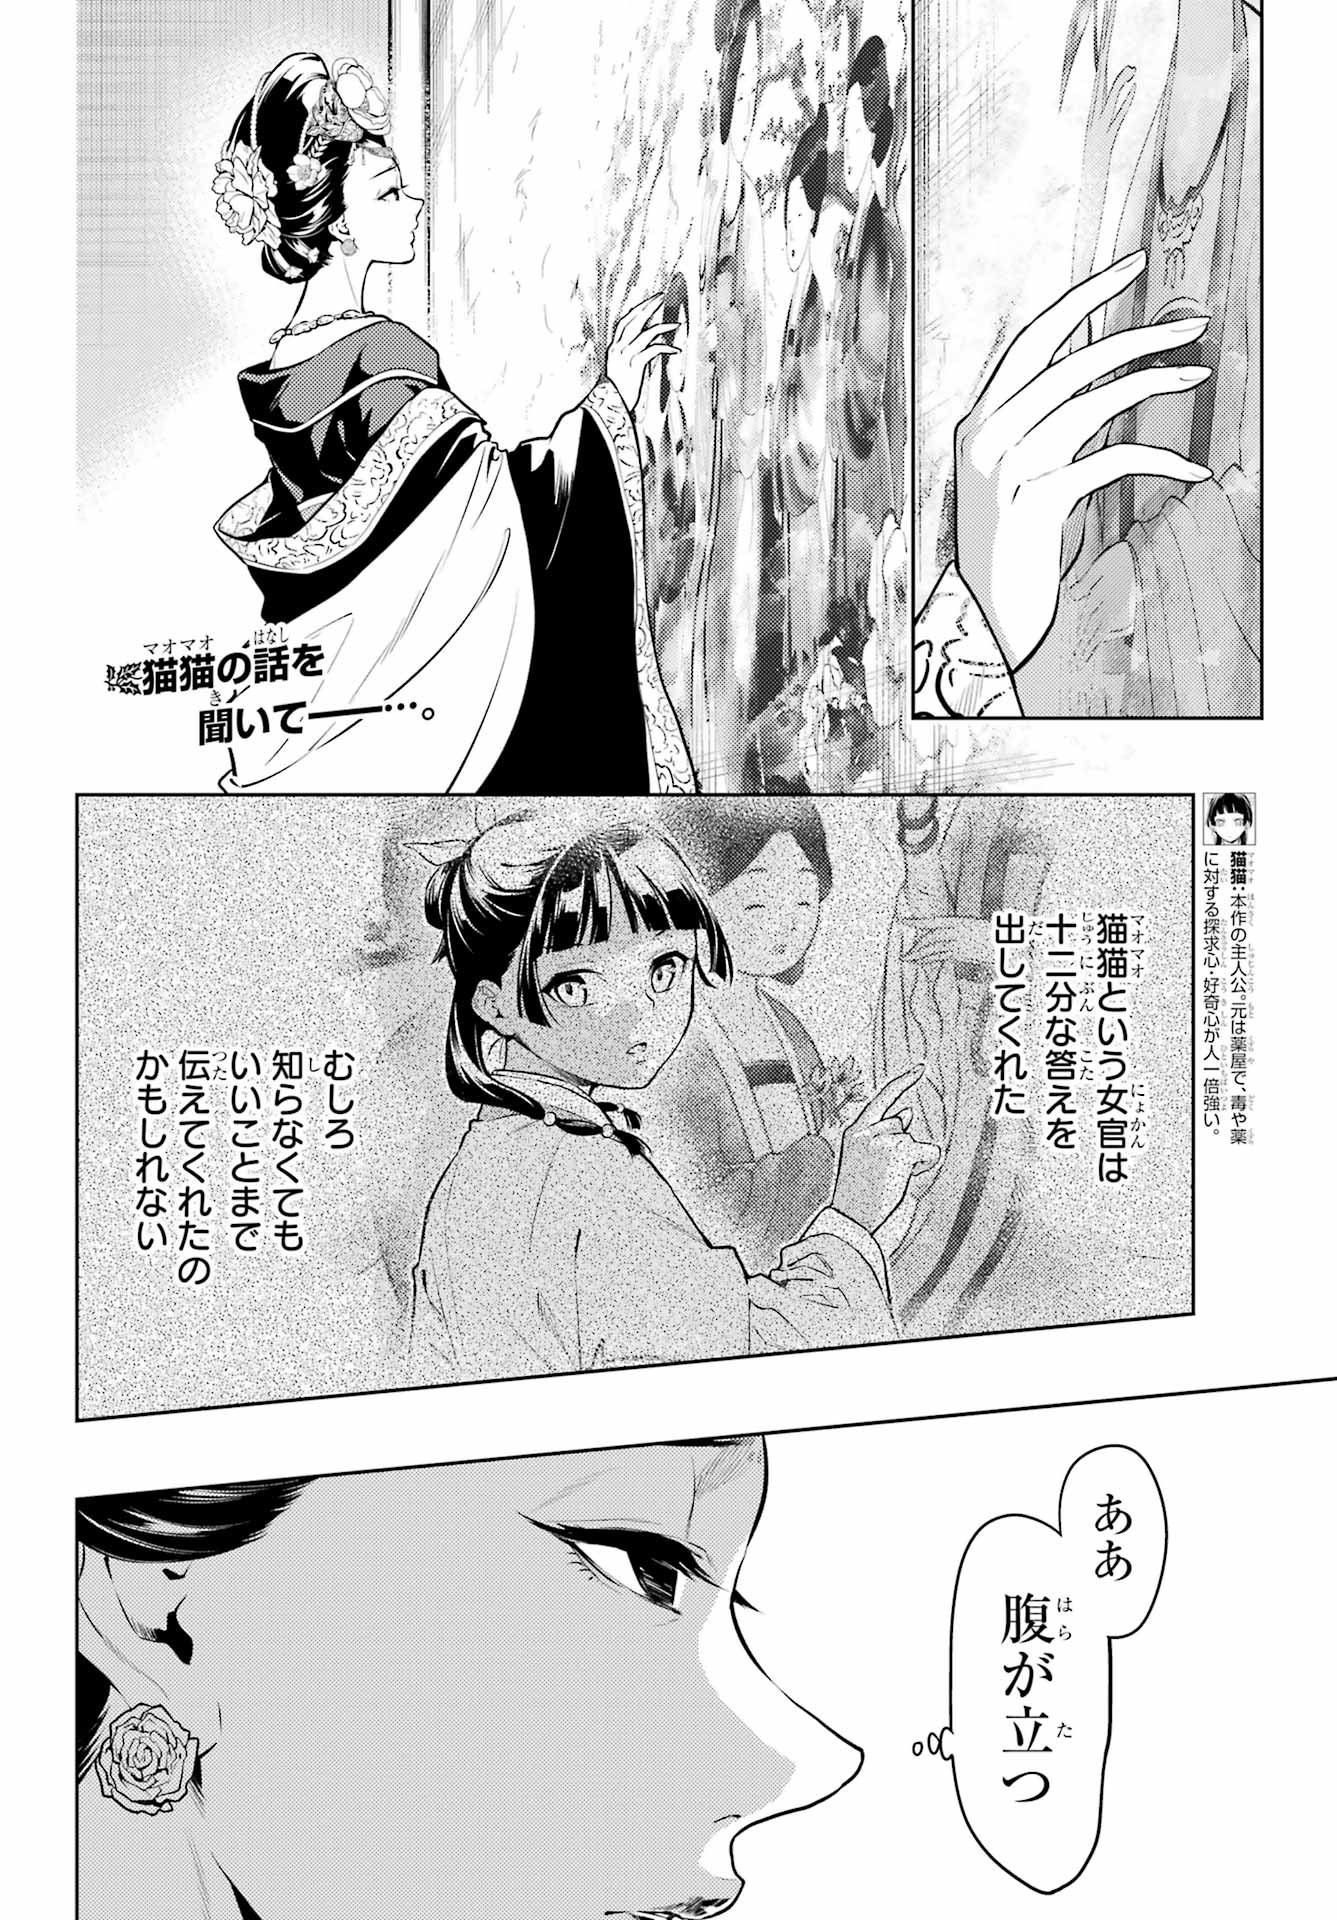 Kusuriya no Hitorigoto - Chapter 58 - Page 2